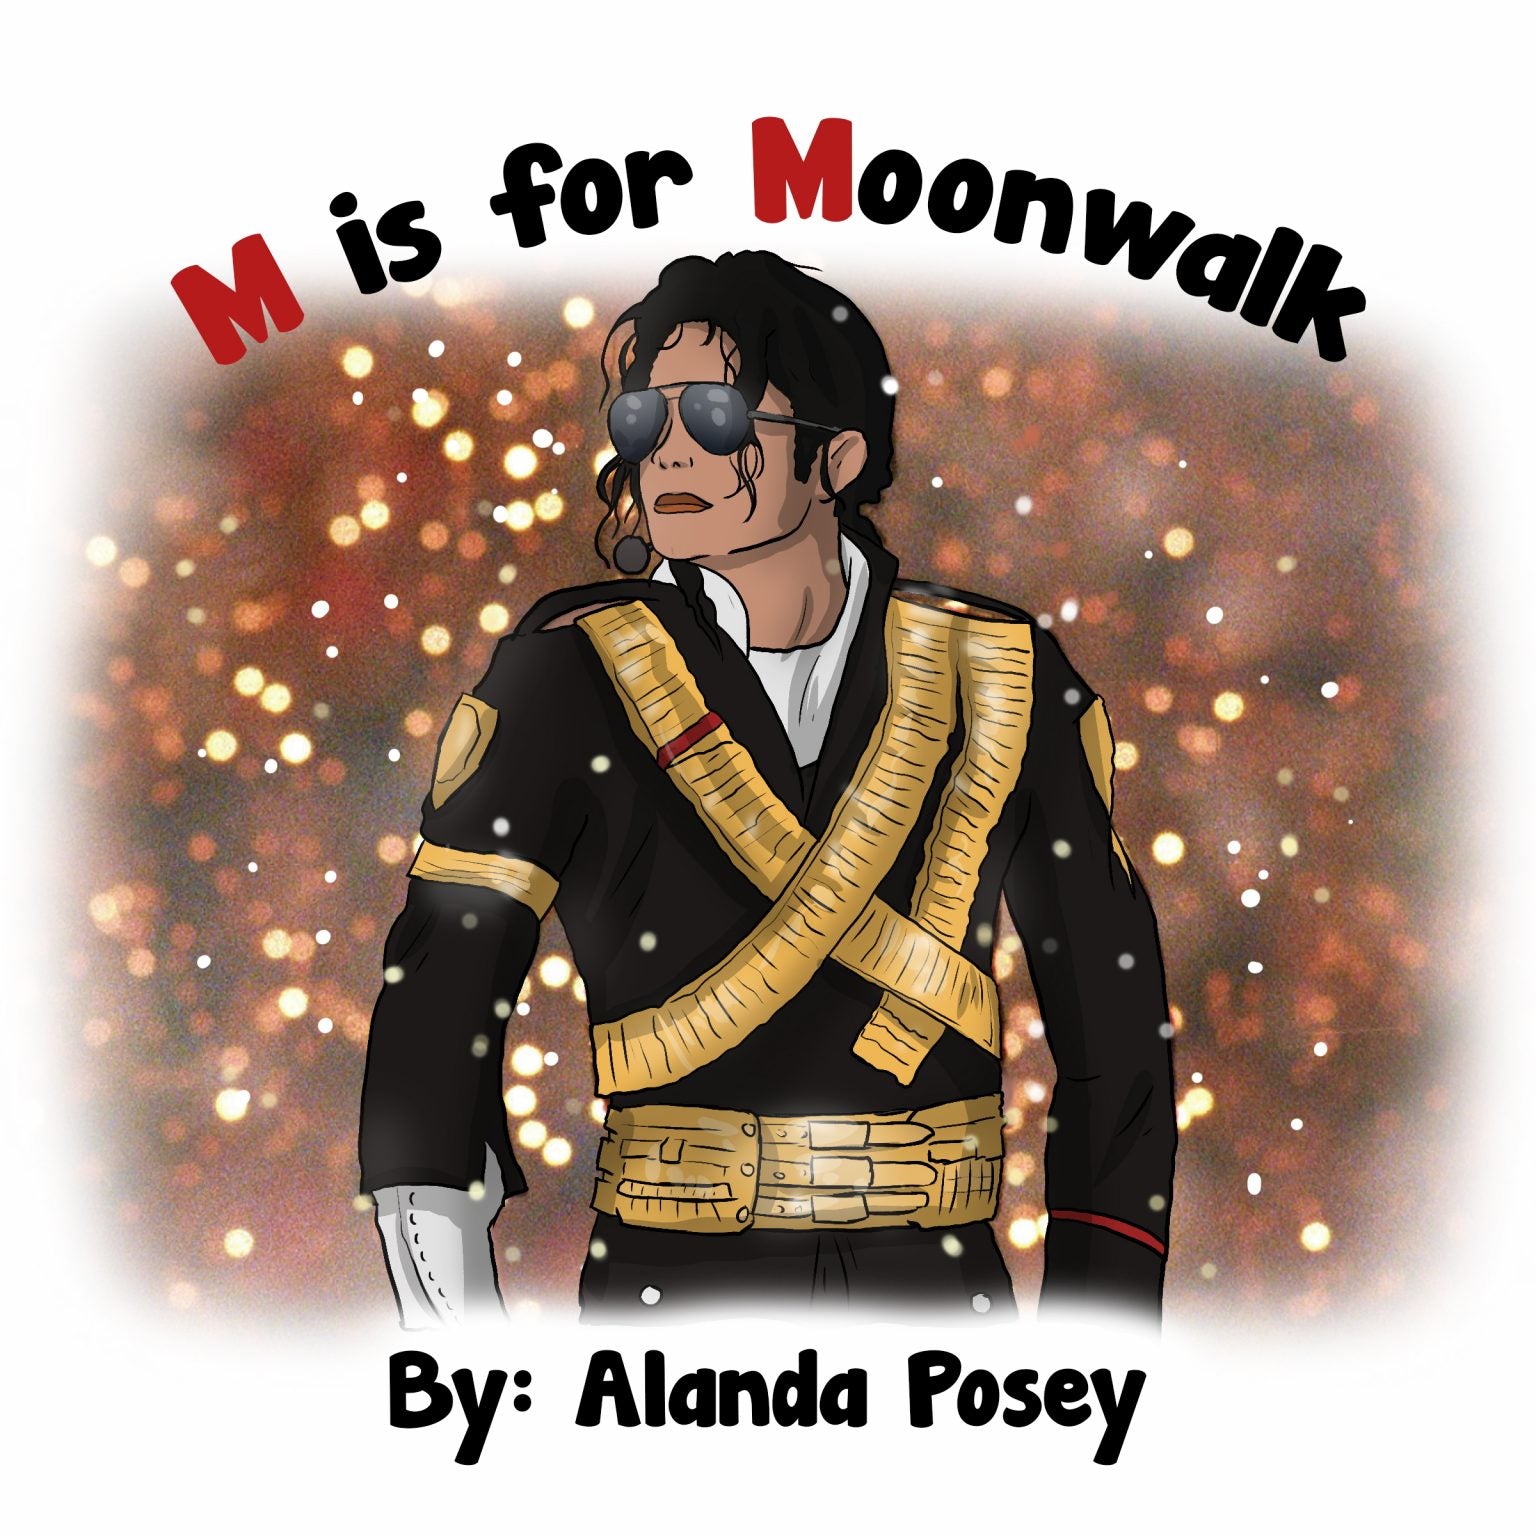 M is for Moonwalk